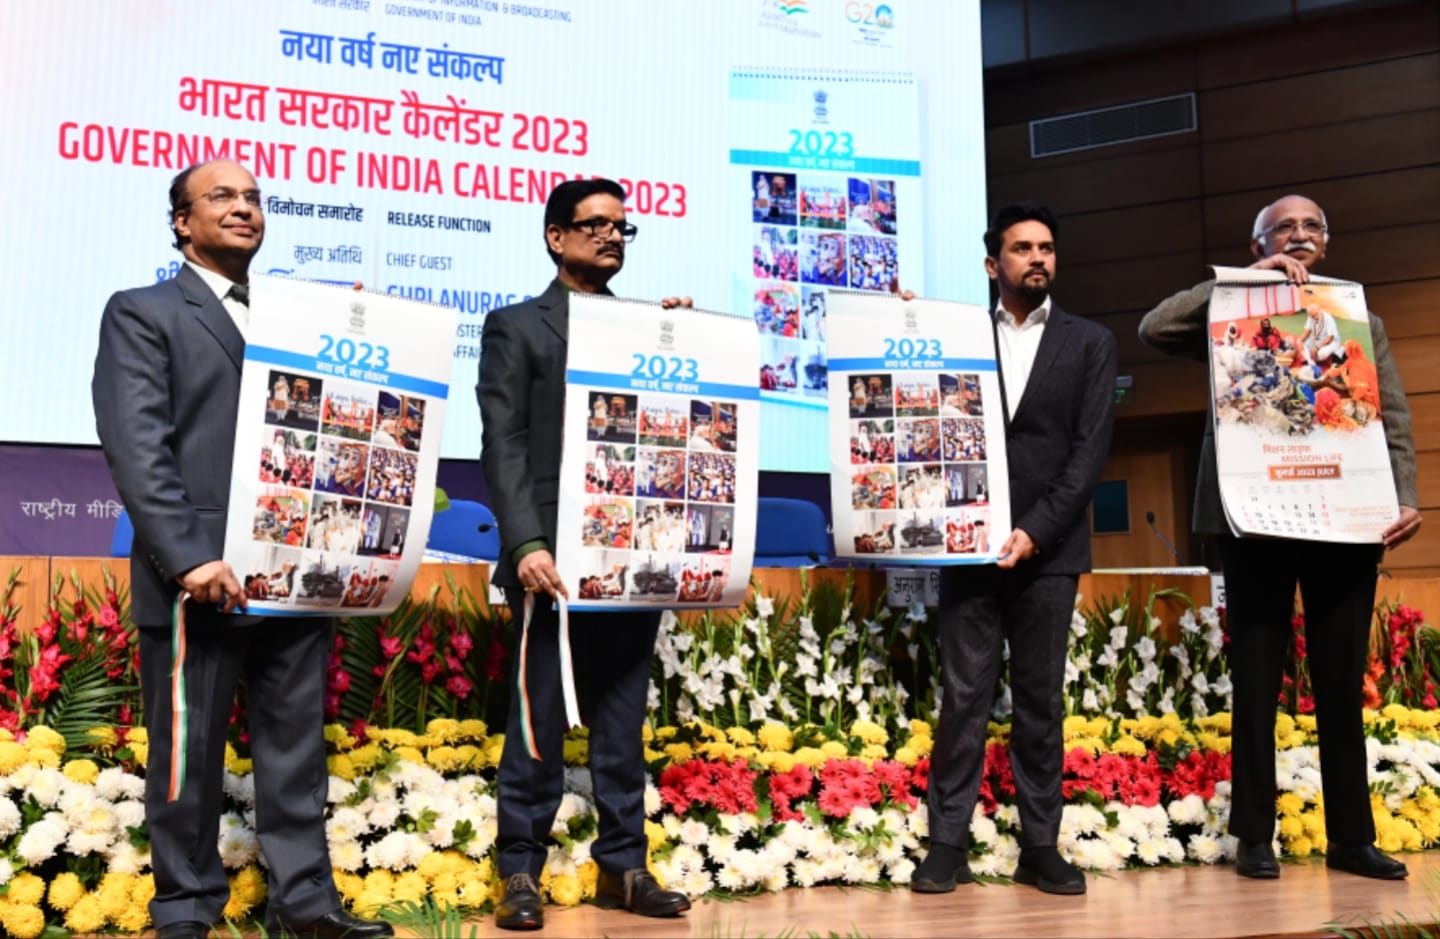 Anurag Thakur releases Govt of India’s annual calendar